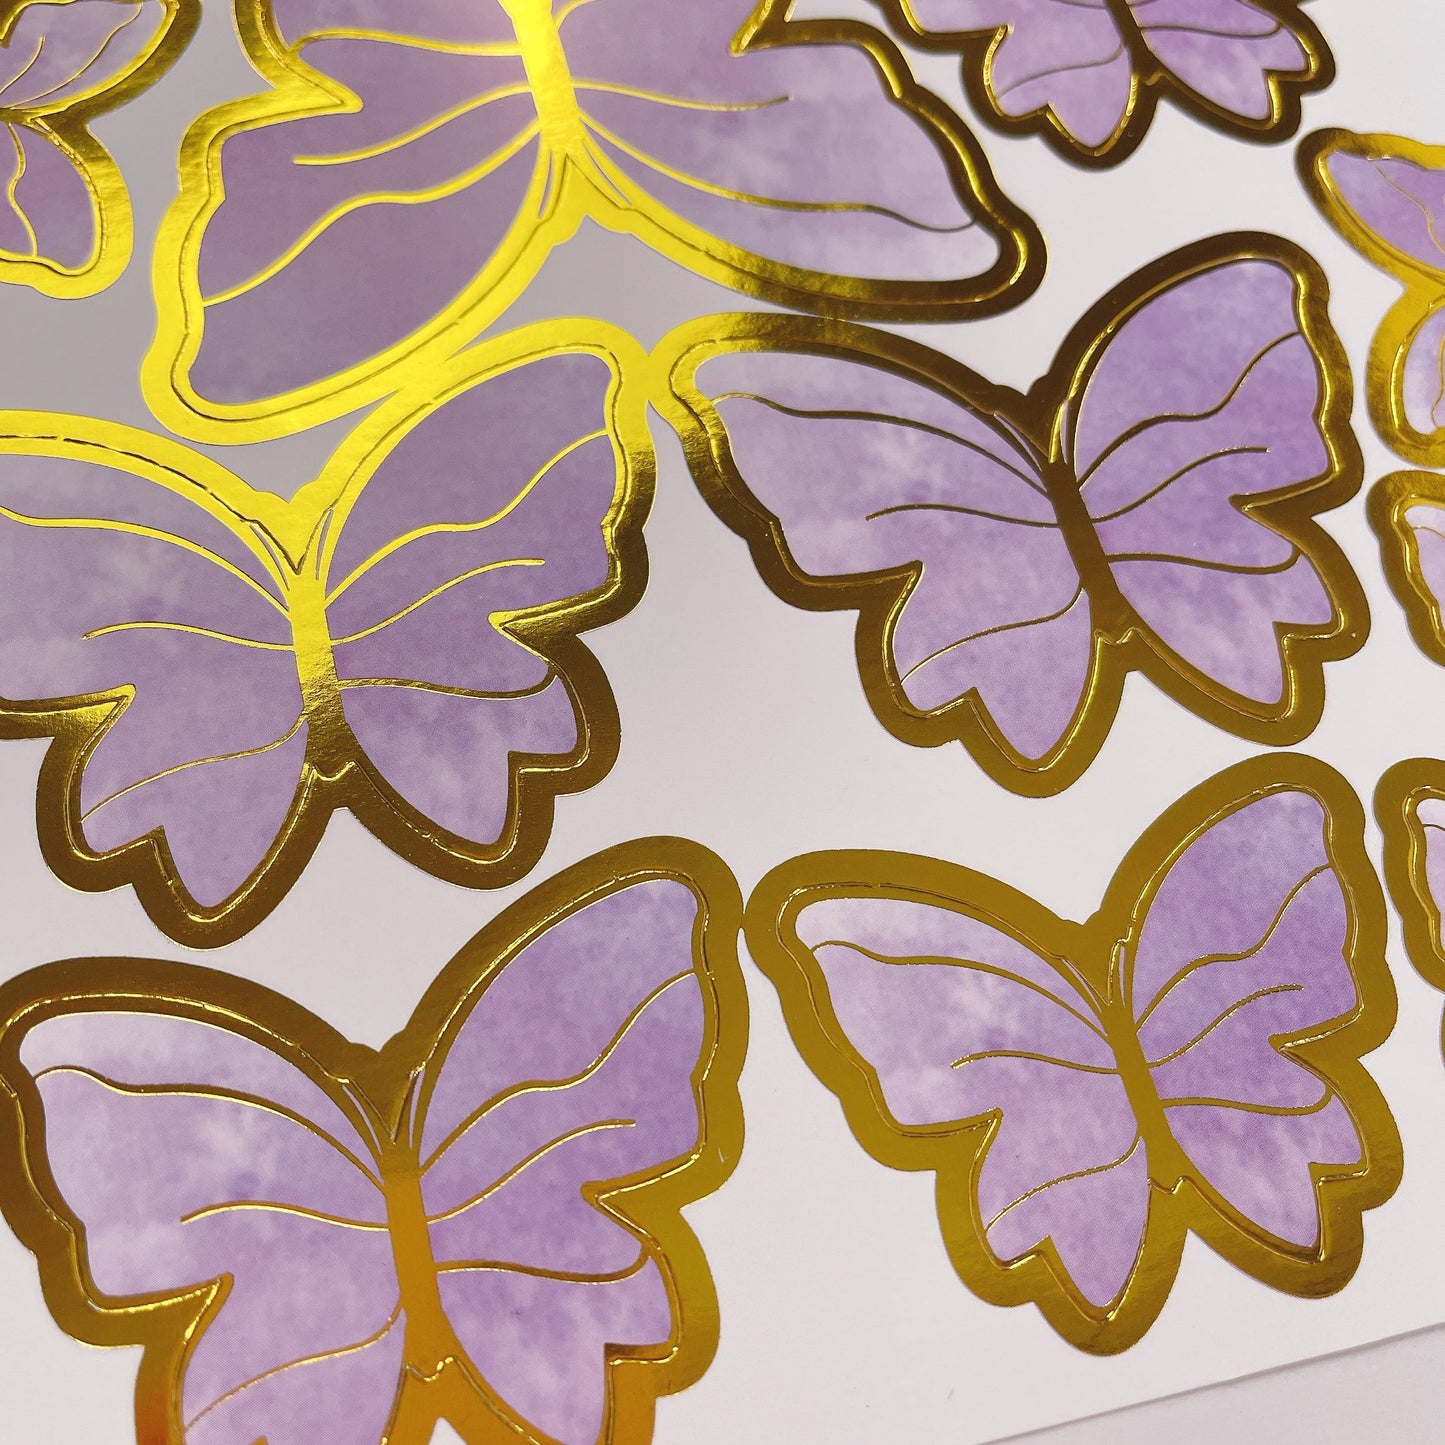 Card Stock Butterflies in Pink or Purple - Set of 10